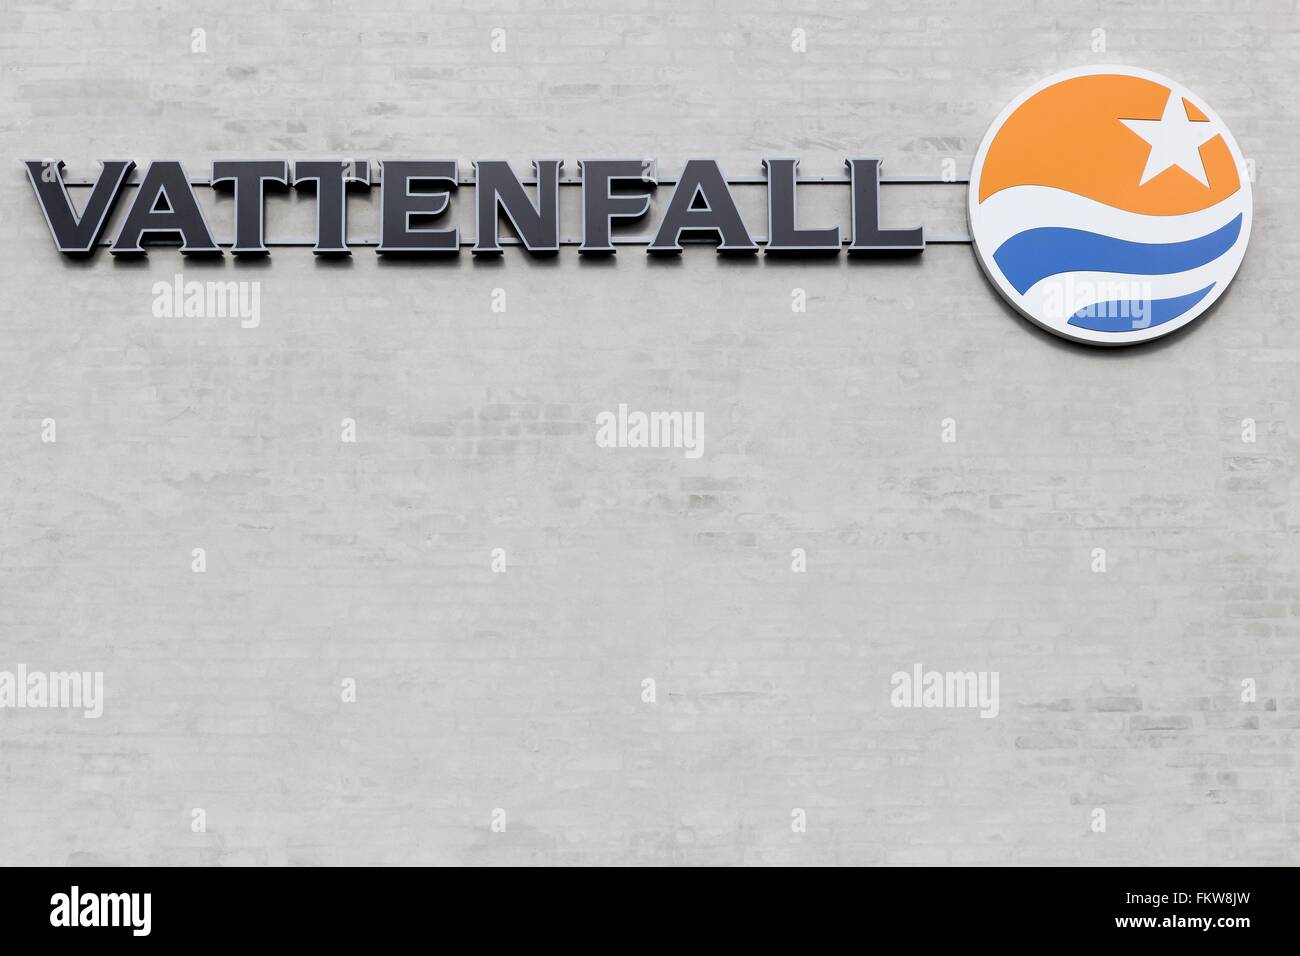 Vattenfall logo on a wall Stock Photo